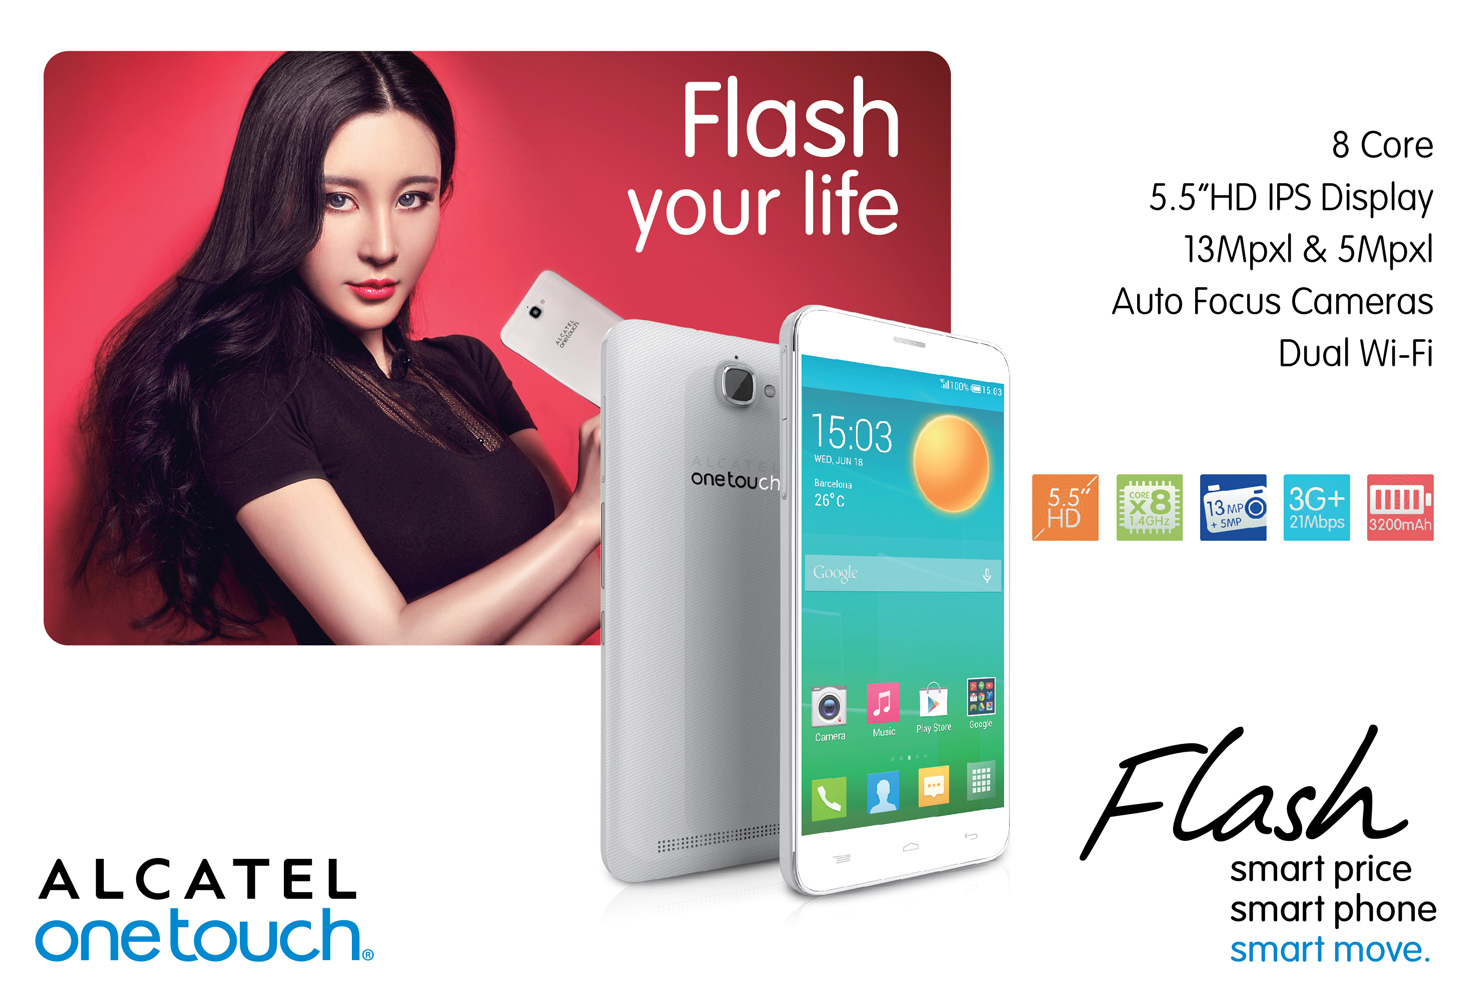 [PR News] Alcatel จัดกิจกรรม Guess the Price, Win a Flash! ชิงรางวัลสมาร์ทโฟน Alcatel Onetouch Flash